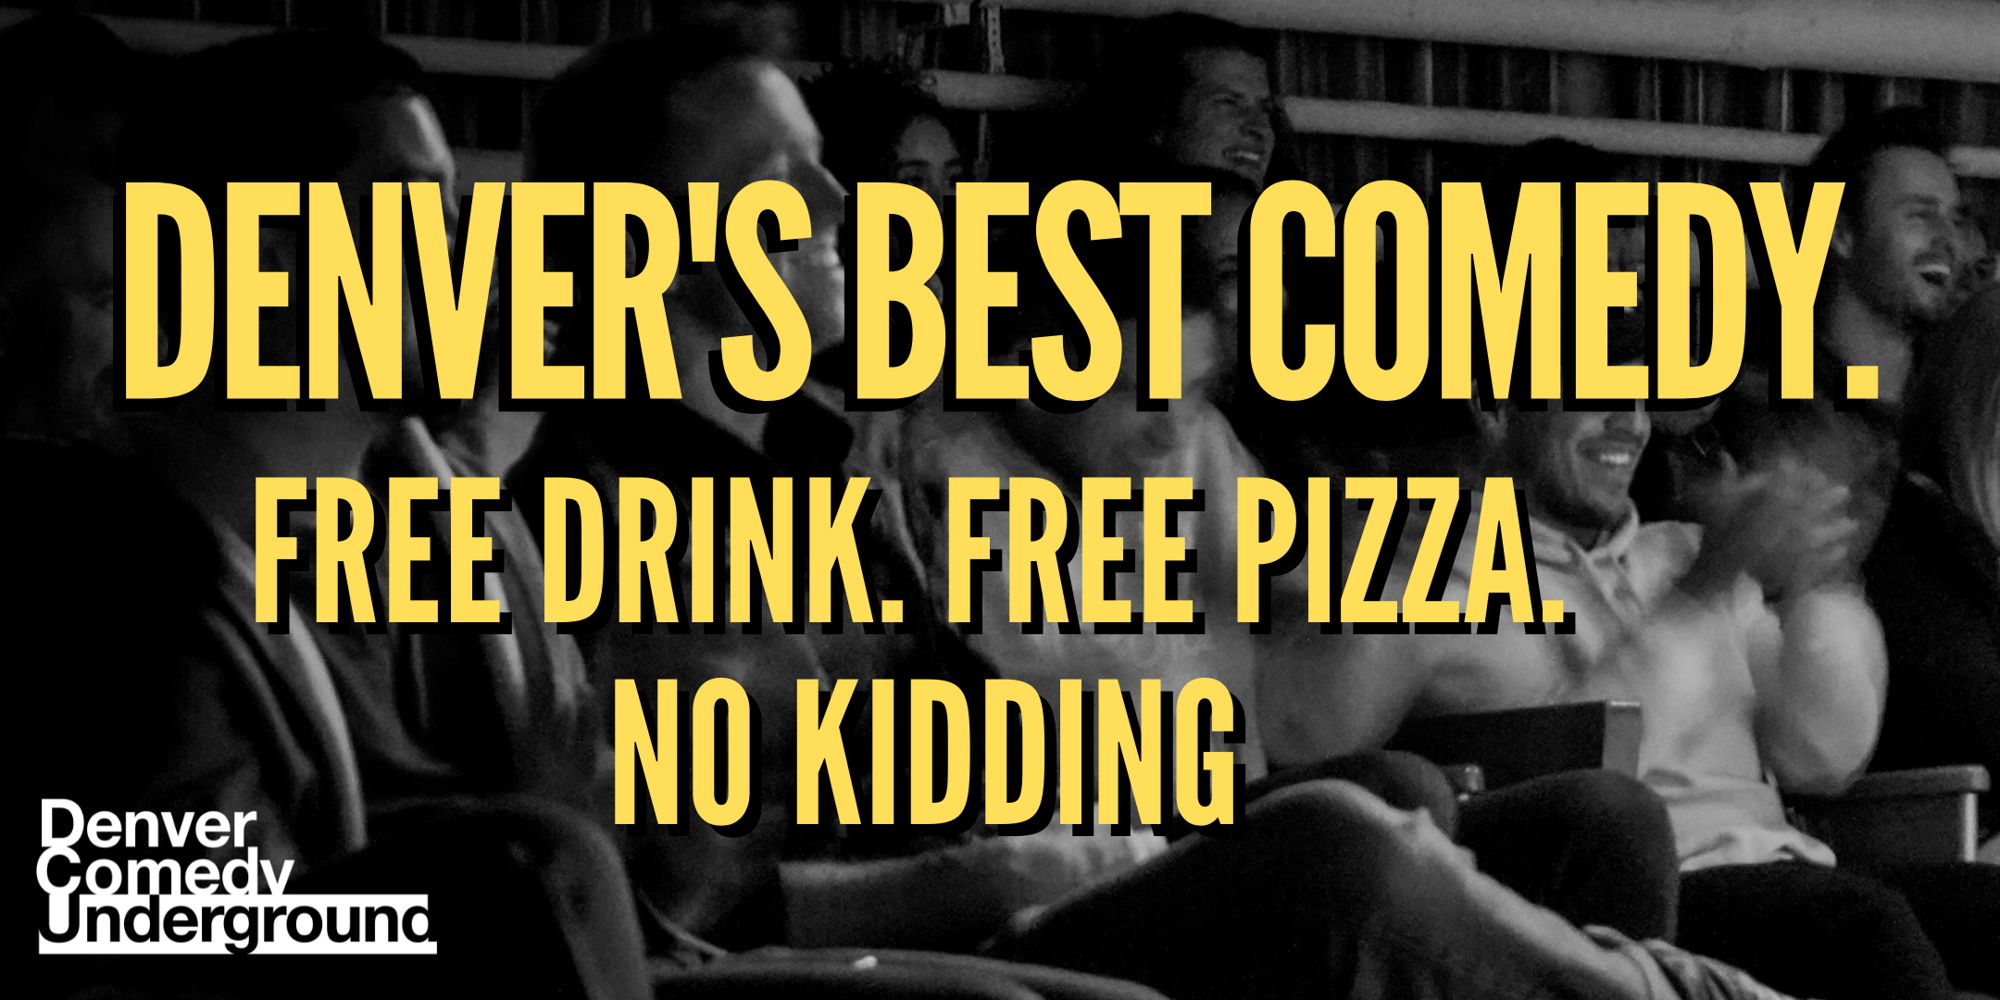 Denver Comedy Underground! Denver's Best Comedy! Free Drink, Free Pizza, No Kidding promotional image